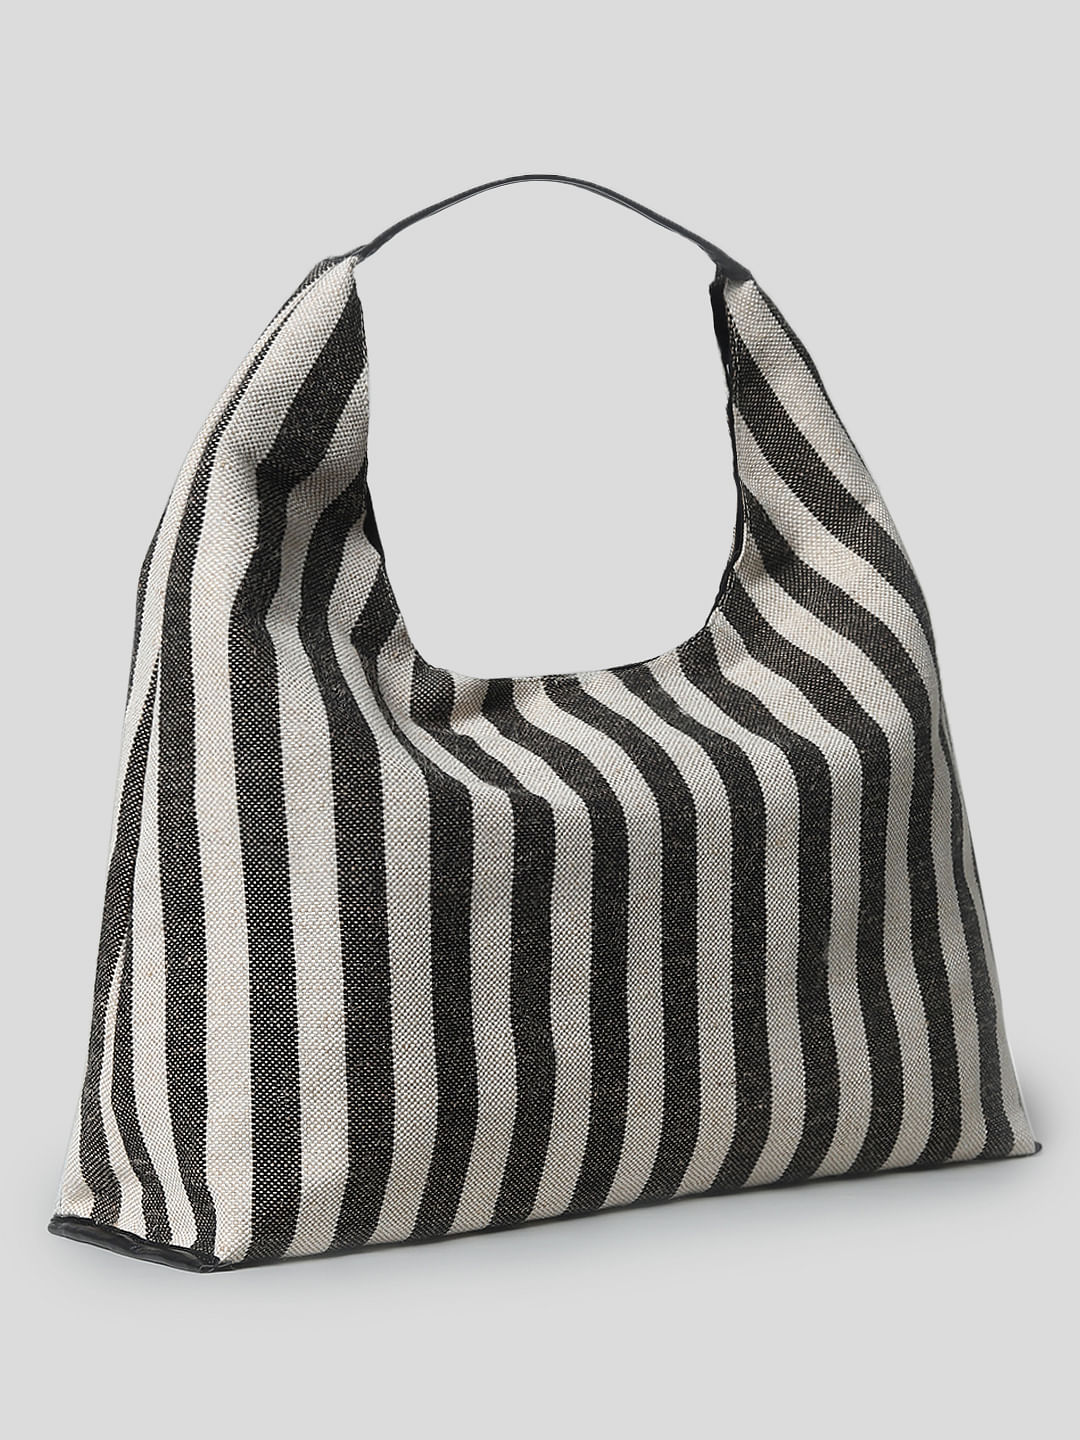 Designer Dupe Women's Handbags, Bags, Clutch, Purses Online